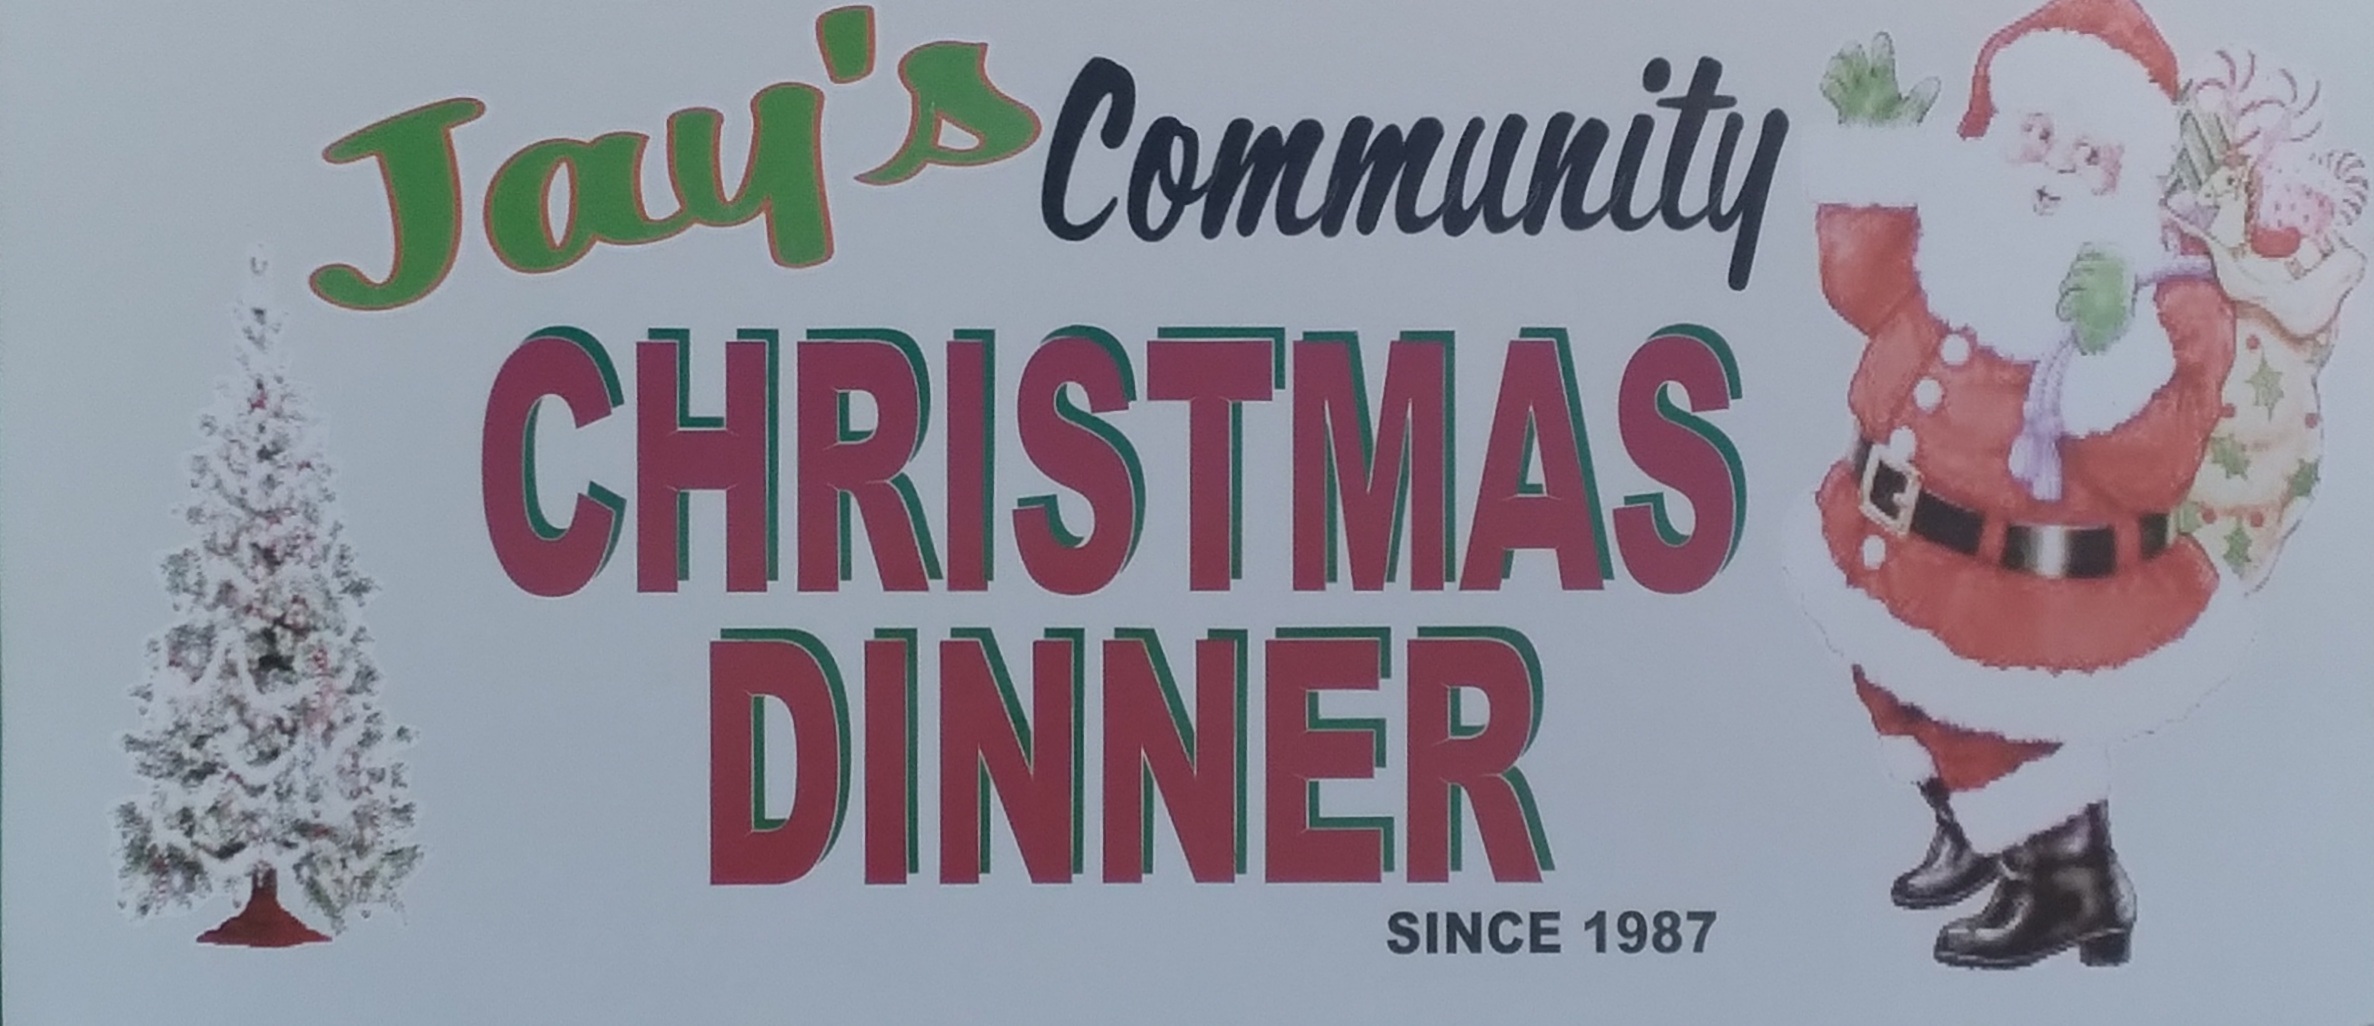 Jay's Community Christmas Dinner SECO News seconews.org 